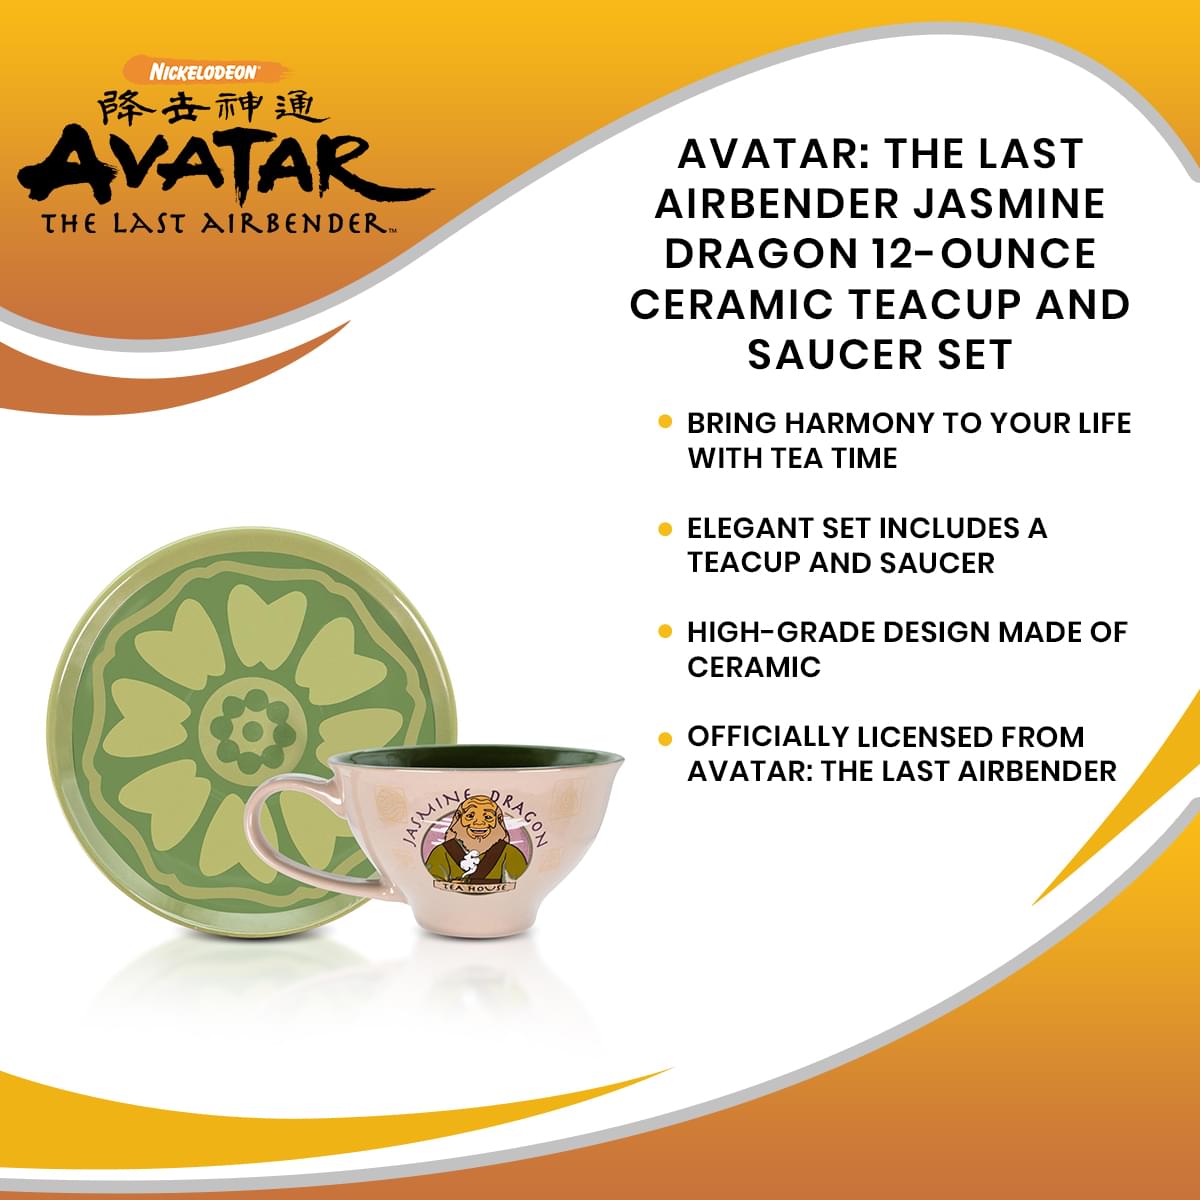 Avatar: The Last Airbender Jasmine Dragon 12-ounce Ceramic Teacup and Saucer Set